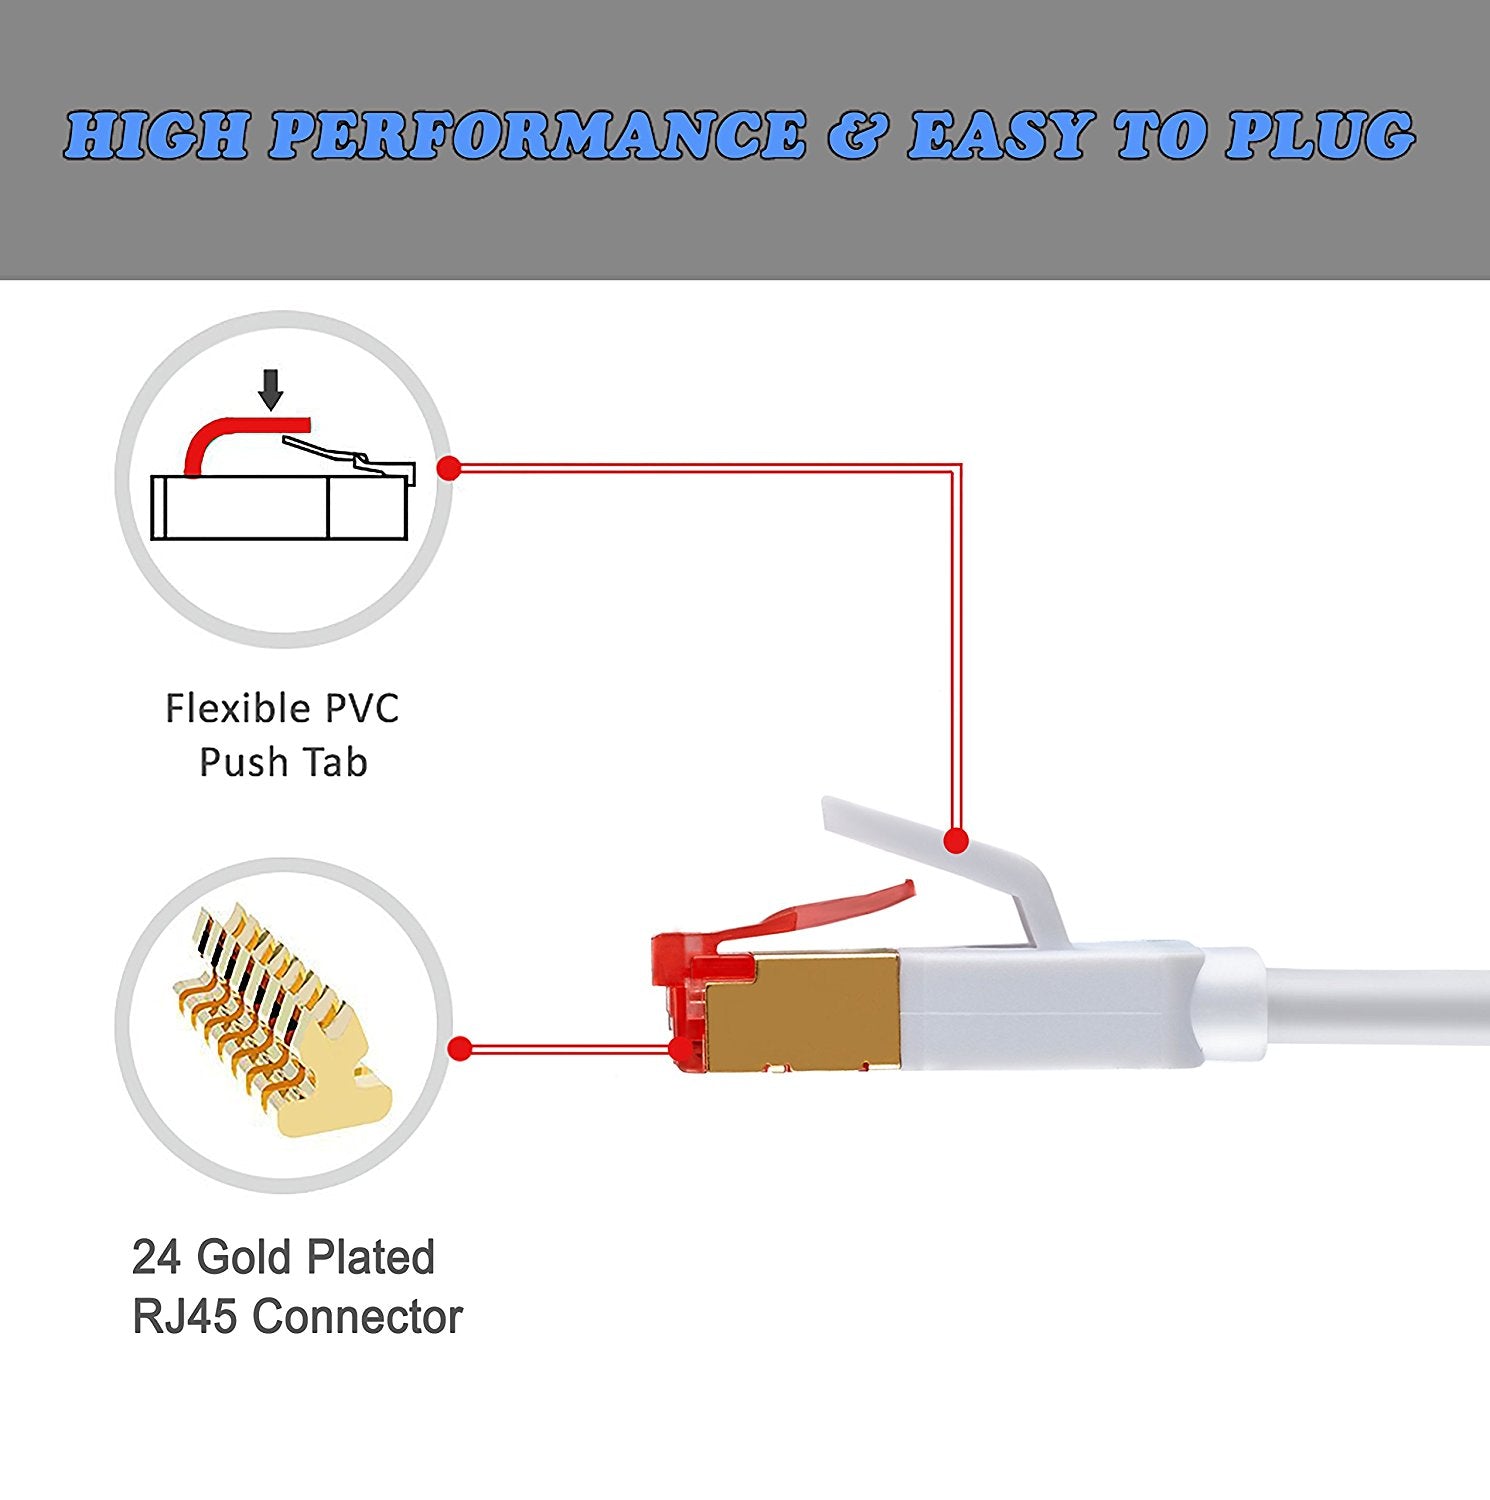 Ethernet Gigabit Lan Network Cable (RJ45) Advanced CAT 7 |Gold Connectors| 10Gbps 600MHz |10/100/1000Mbit/s | Patch cable |STP| compatible with CAT.5 / CAT.5e / CAT.6 | Switch/Router/Modem/Patch panel / Access Point / patch fields | 10M IBRA Round